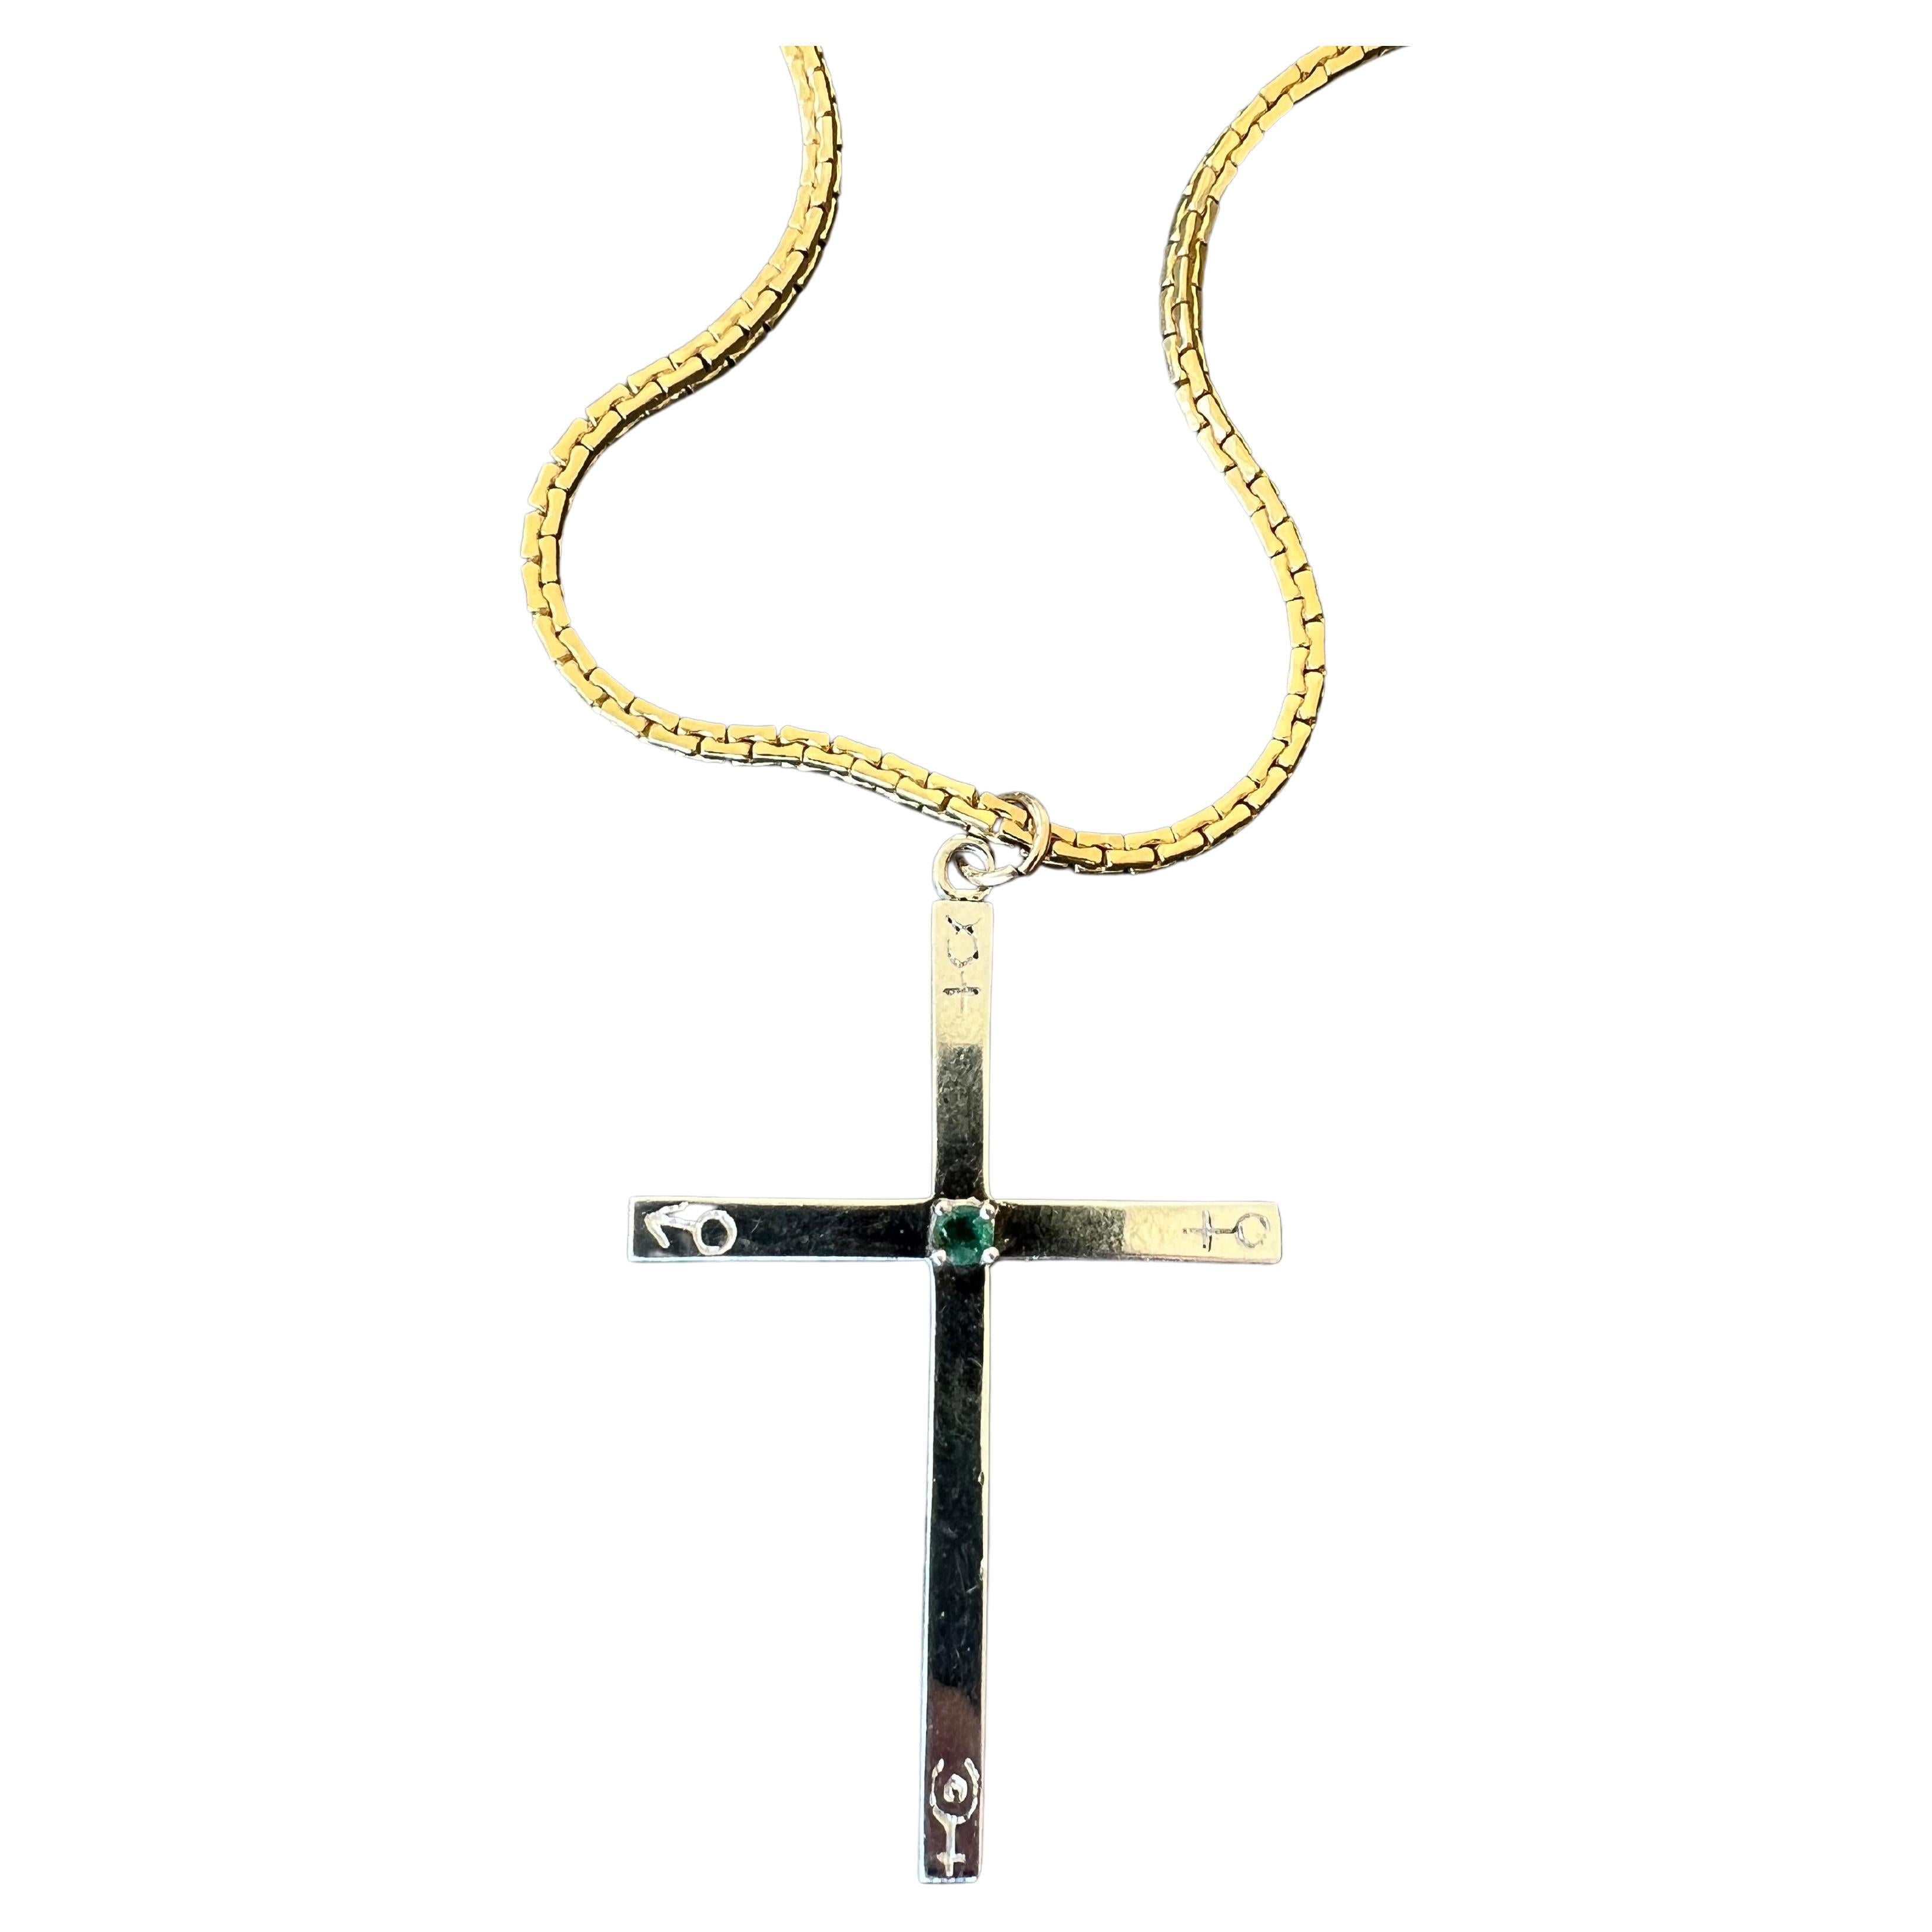 Emerald Cross Necklace Engraved Astrology Symbols Spiritual Balance Healing
Approximately 28